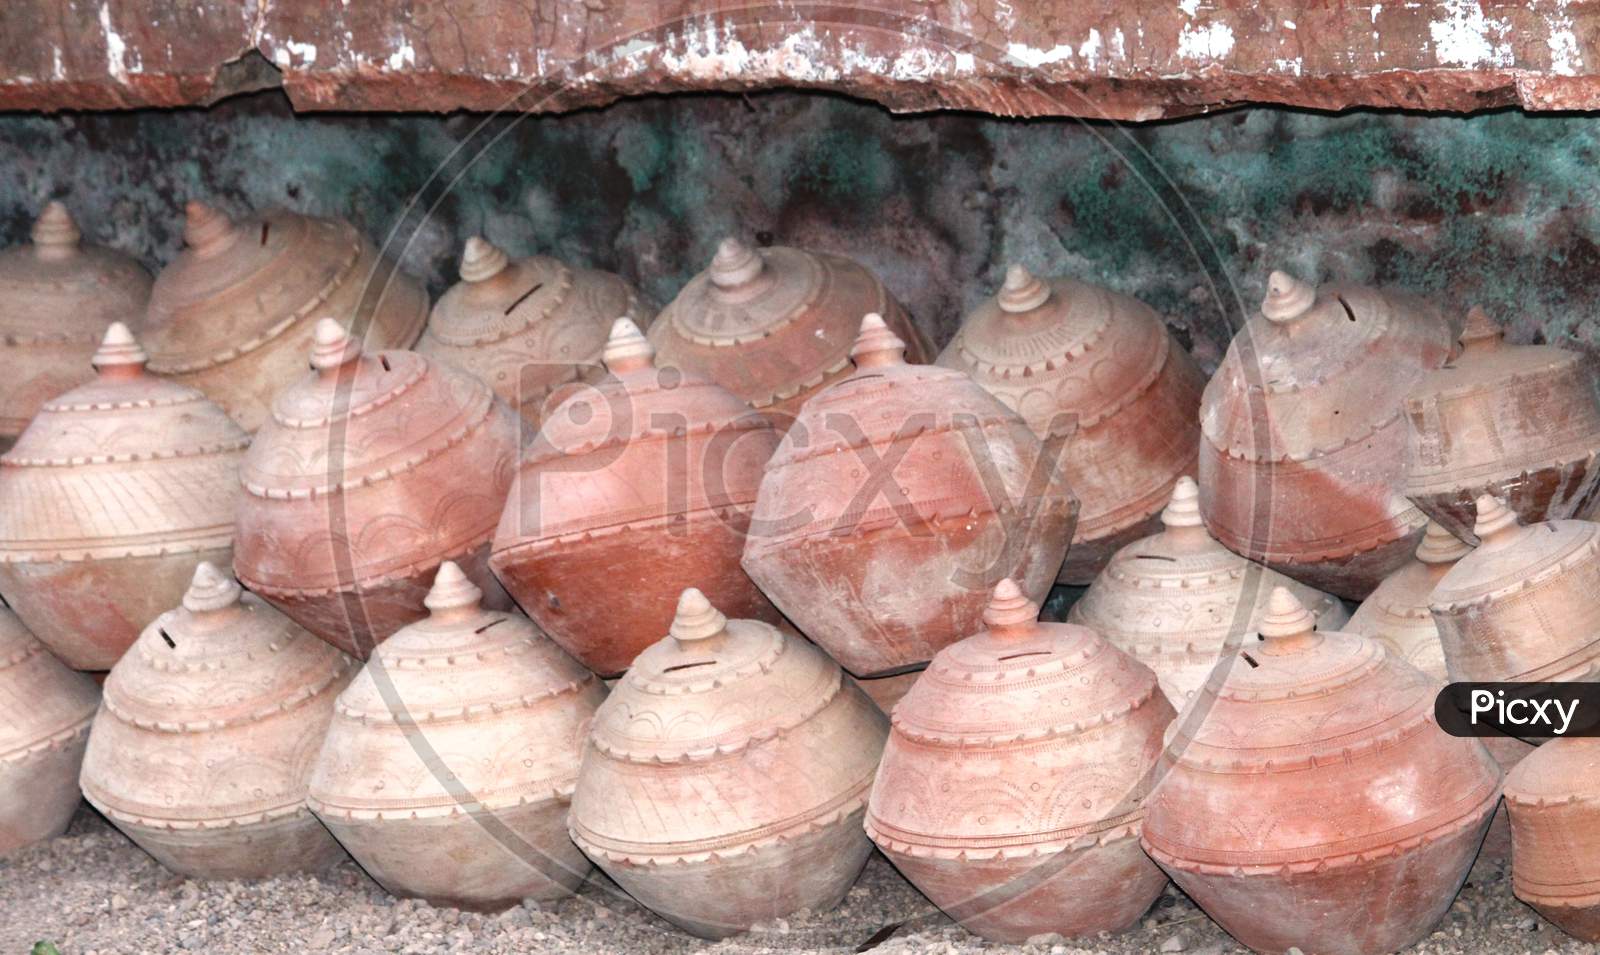 handmade clay piggie banks - gullak